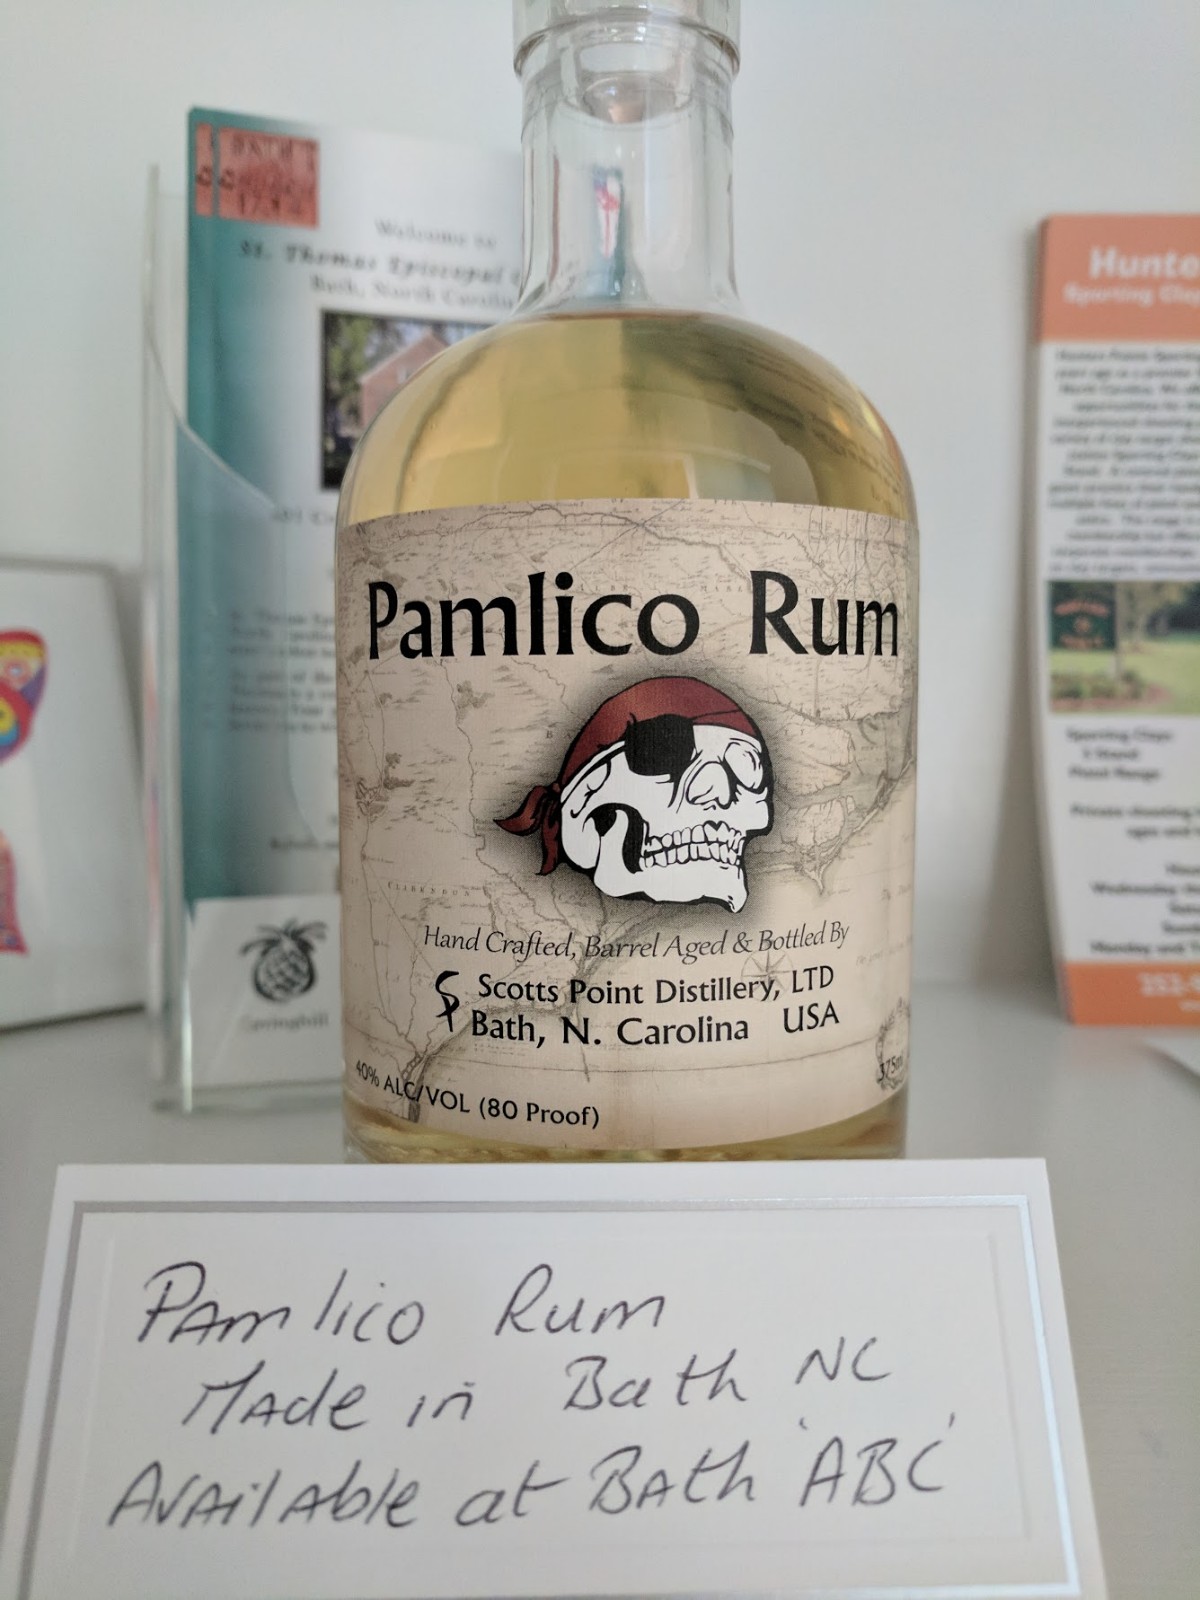 Where’s the Rum? North Carolina, That’s Where!